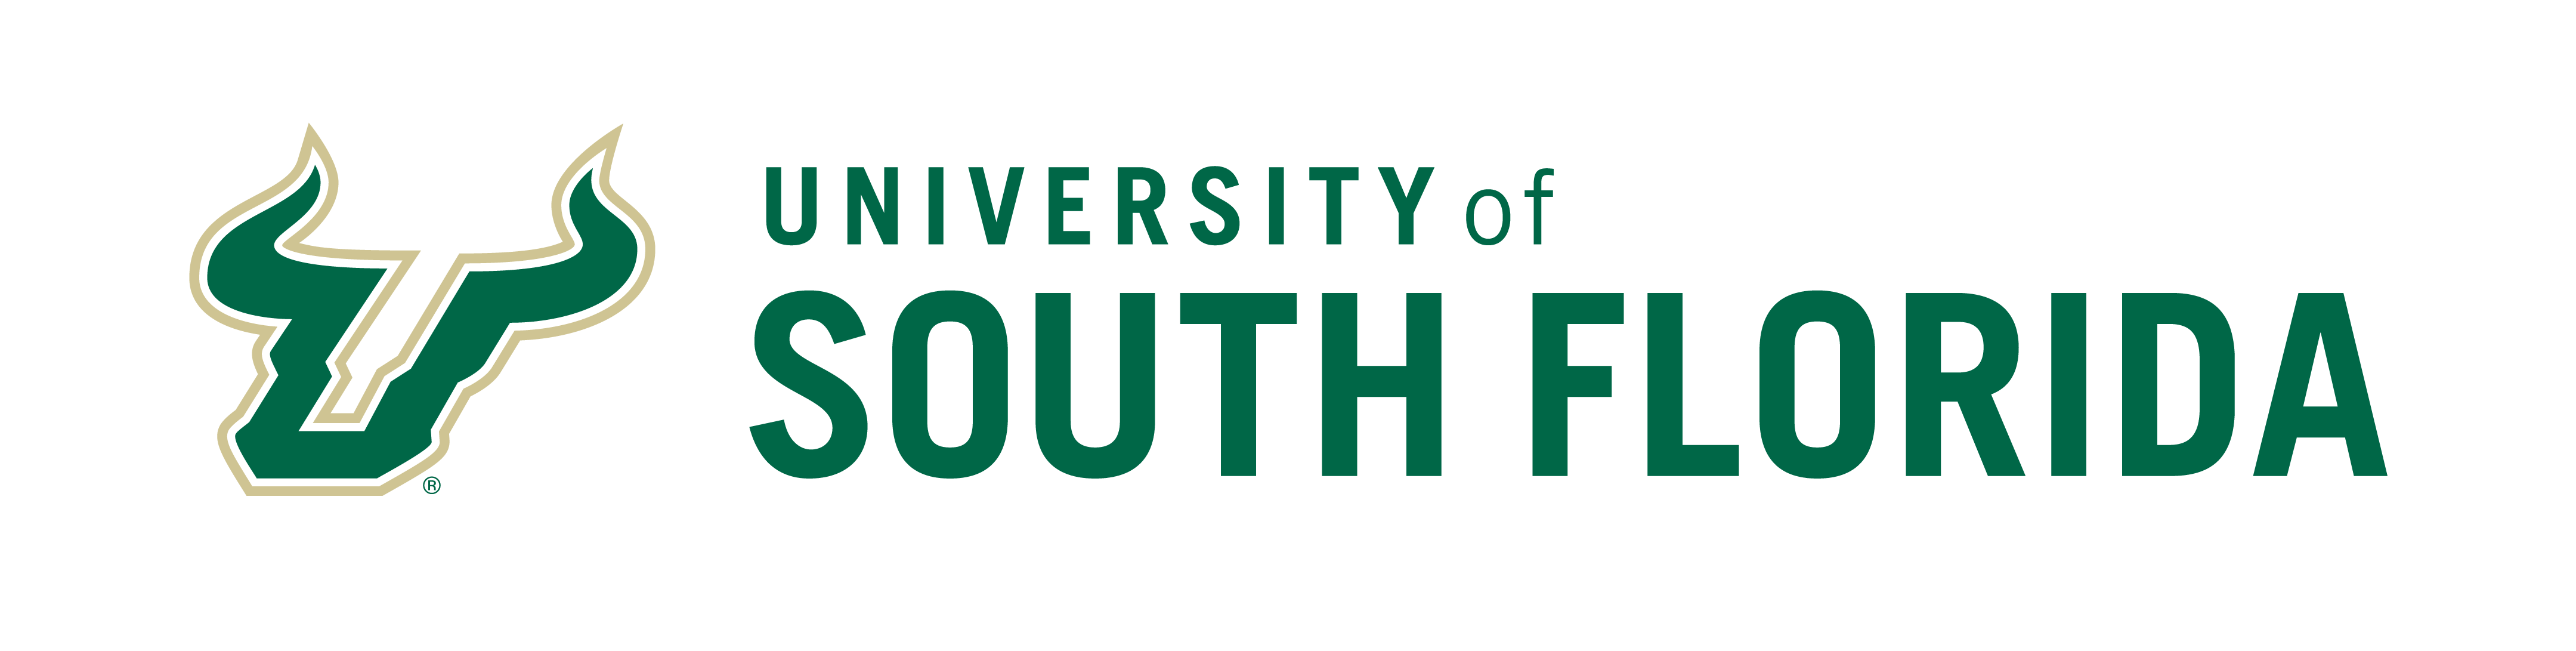 University of South Florida Primary Logo